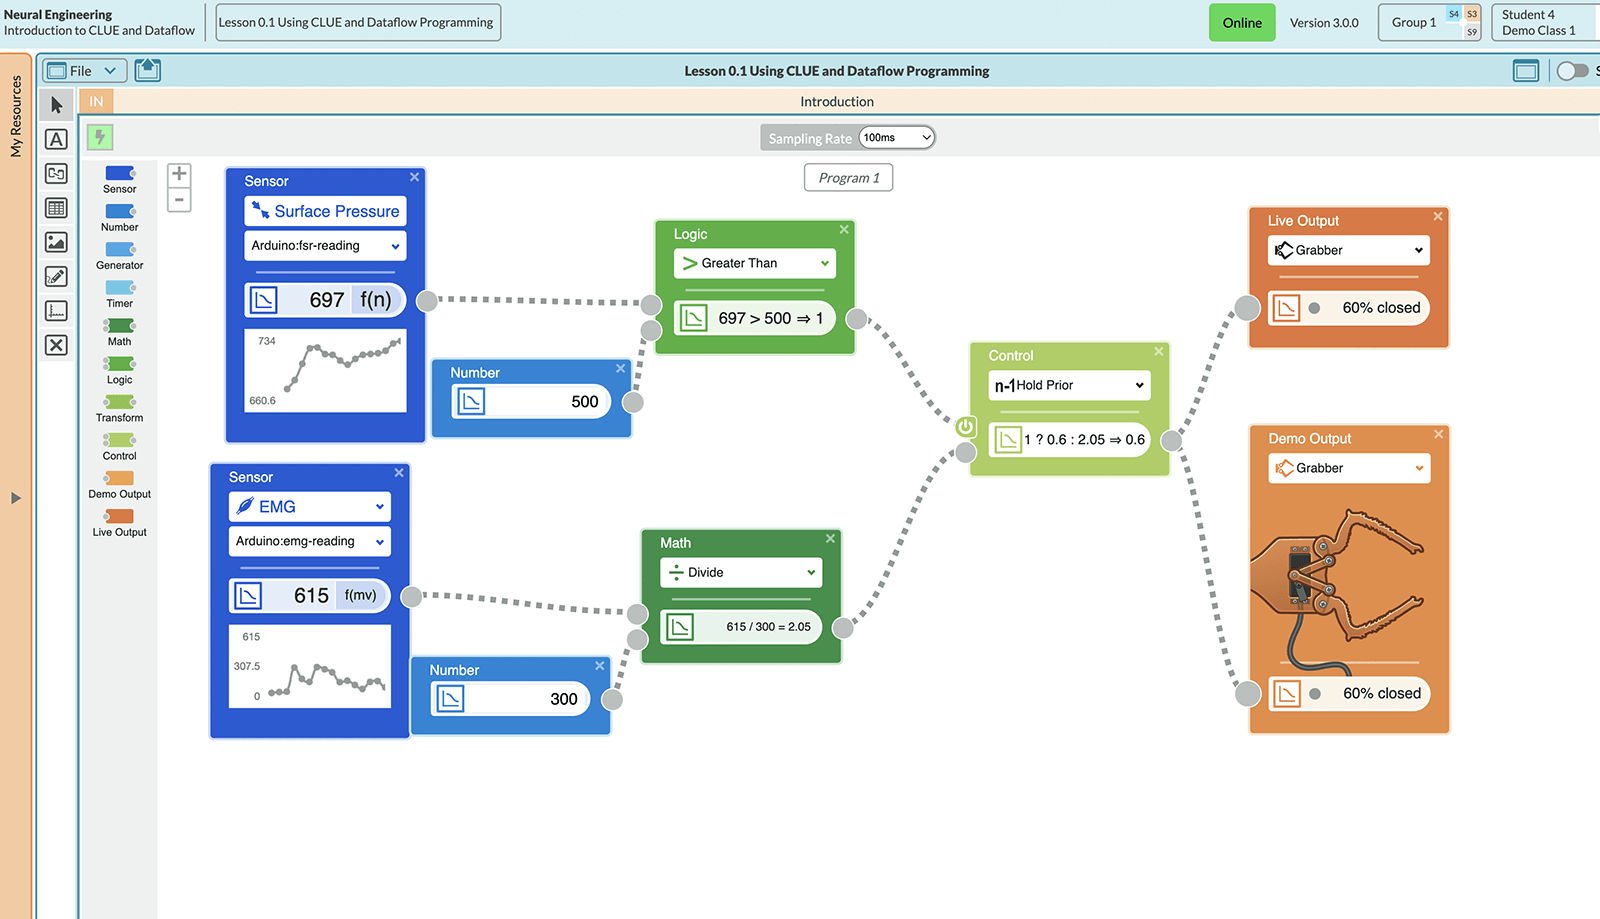 A Dataflow program to control the Grabber